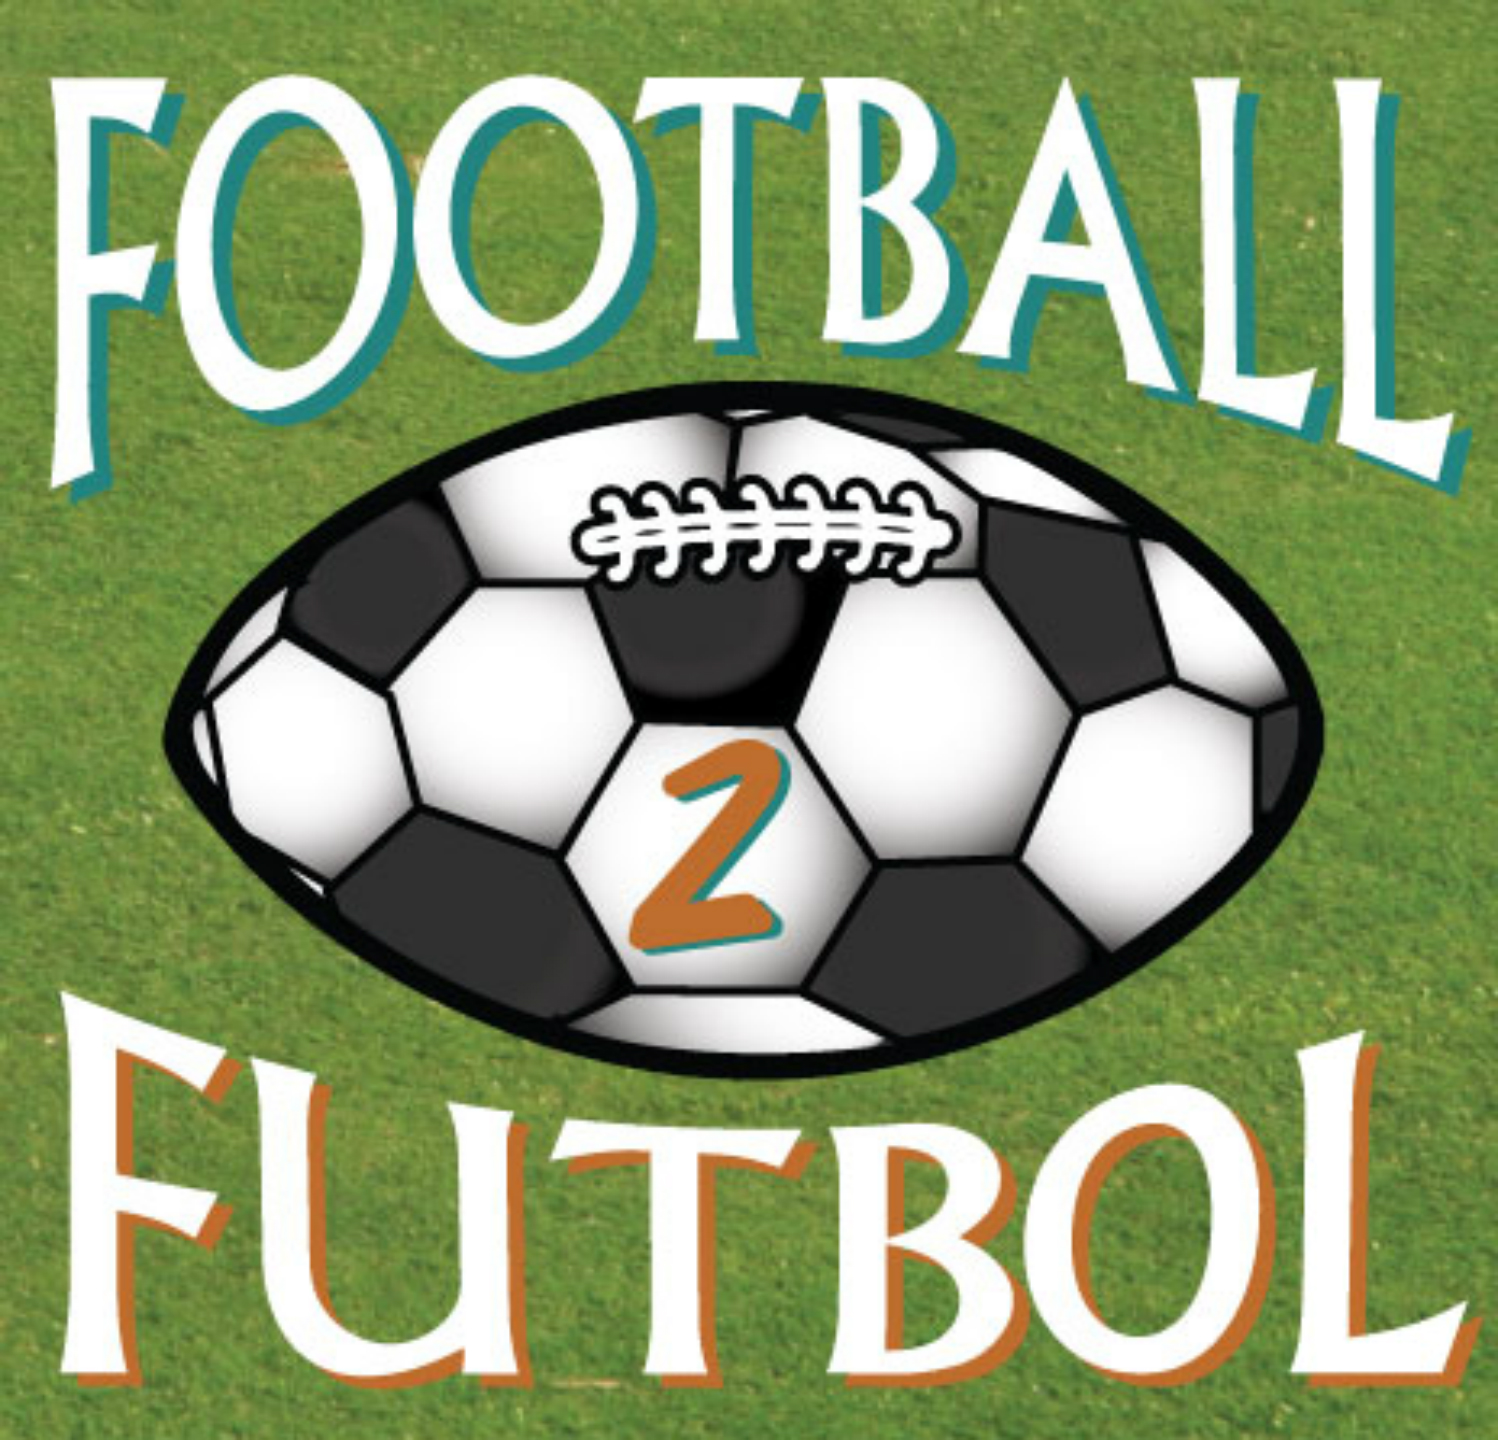 Football 2 Futbol:  NFL Week 15 Recap, Lions vs. Saints MNF Post-Game, & CFB Bowls